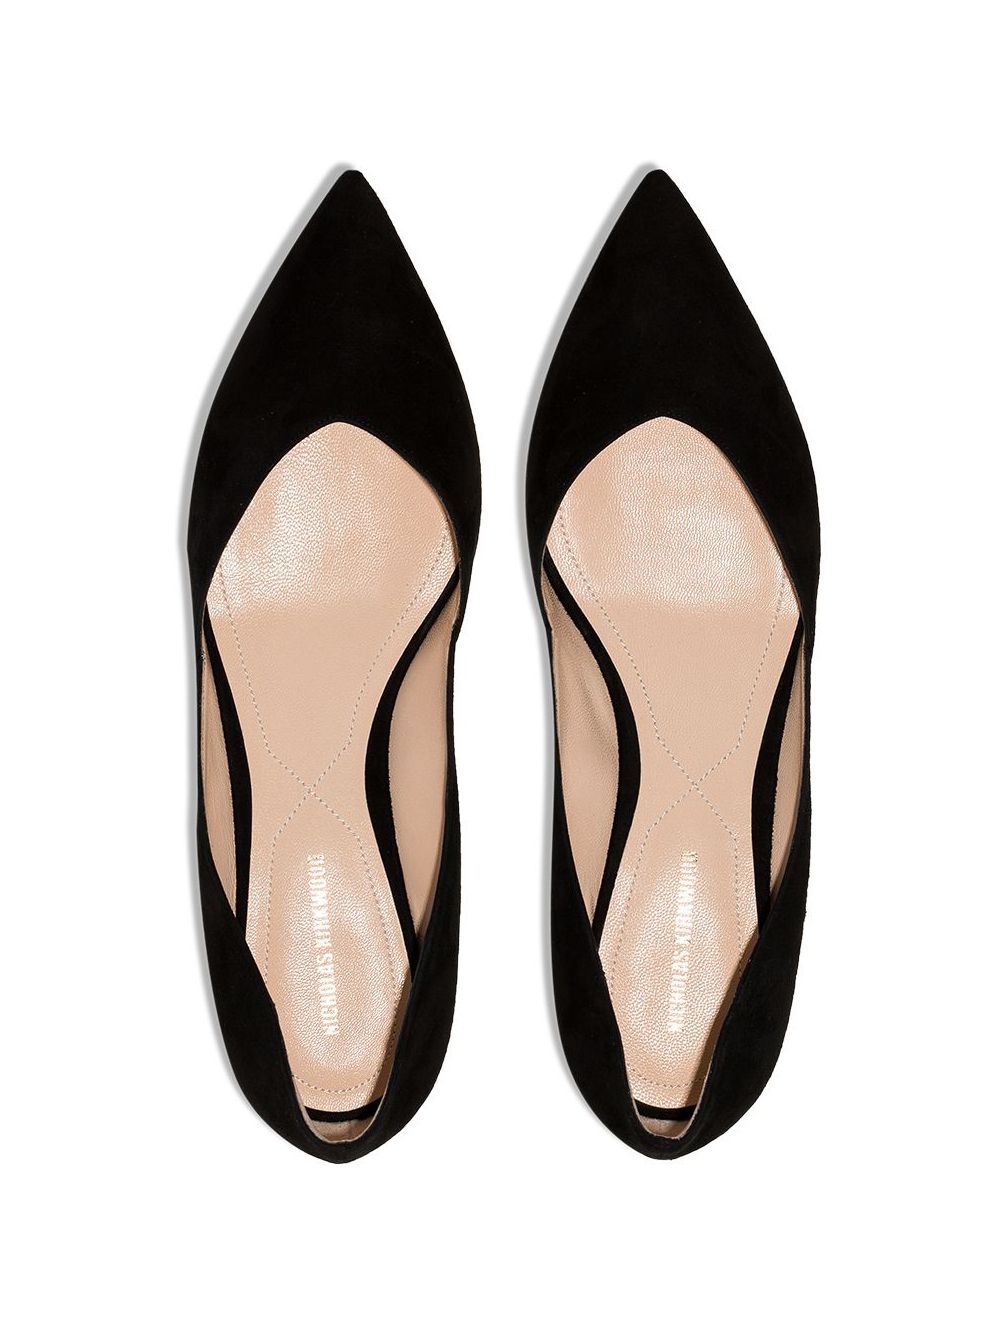 Nicholas Kirkwood Casati D'Orsay Ballerina Shoes - Farfetch